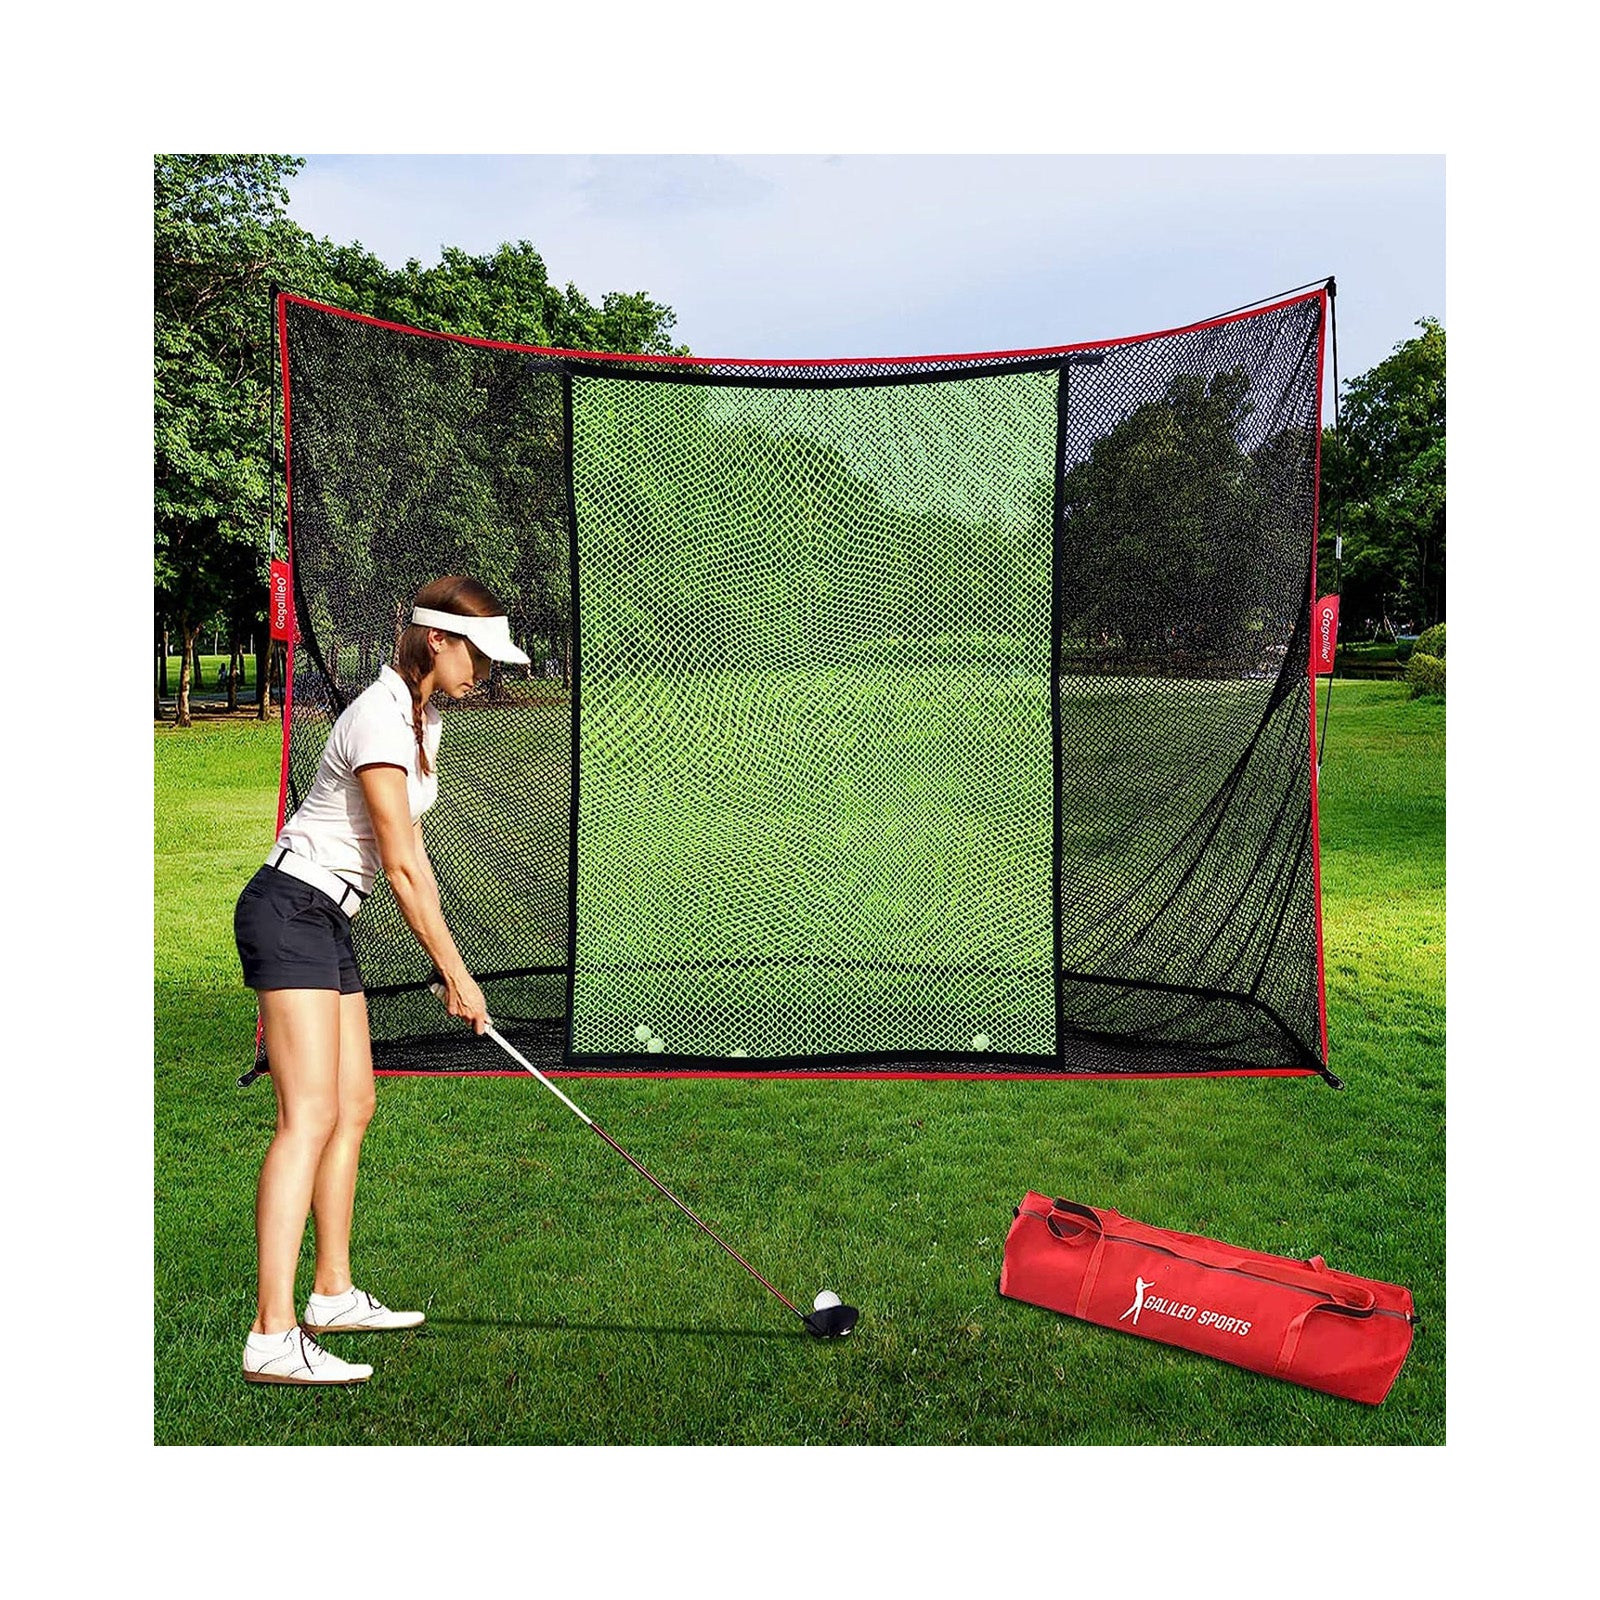 Golf Hitting Nets for Backyard,Golf Net for Indoor,10x7FT Golf Driving Range,Golf Shooting Net with Carry Bag Quick Setup